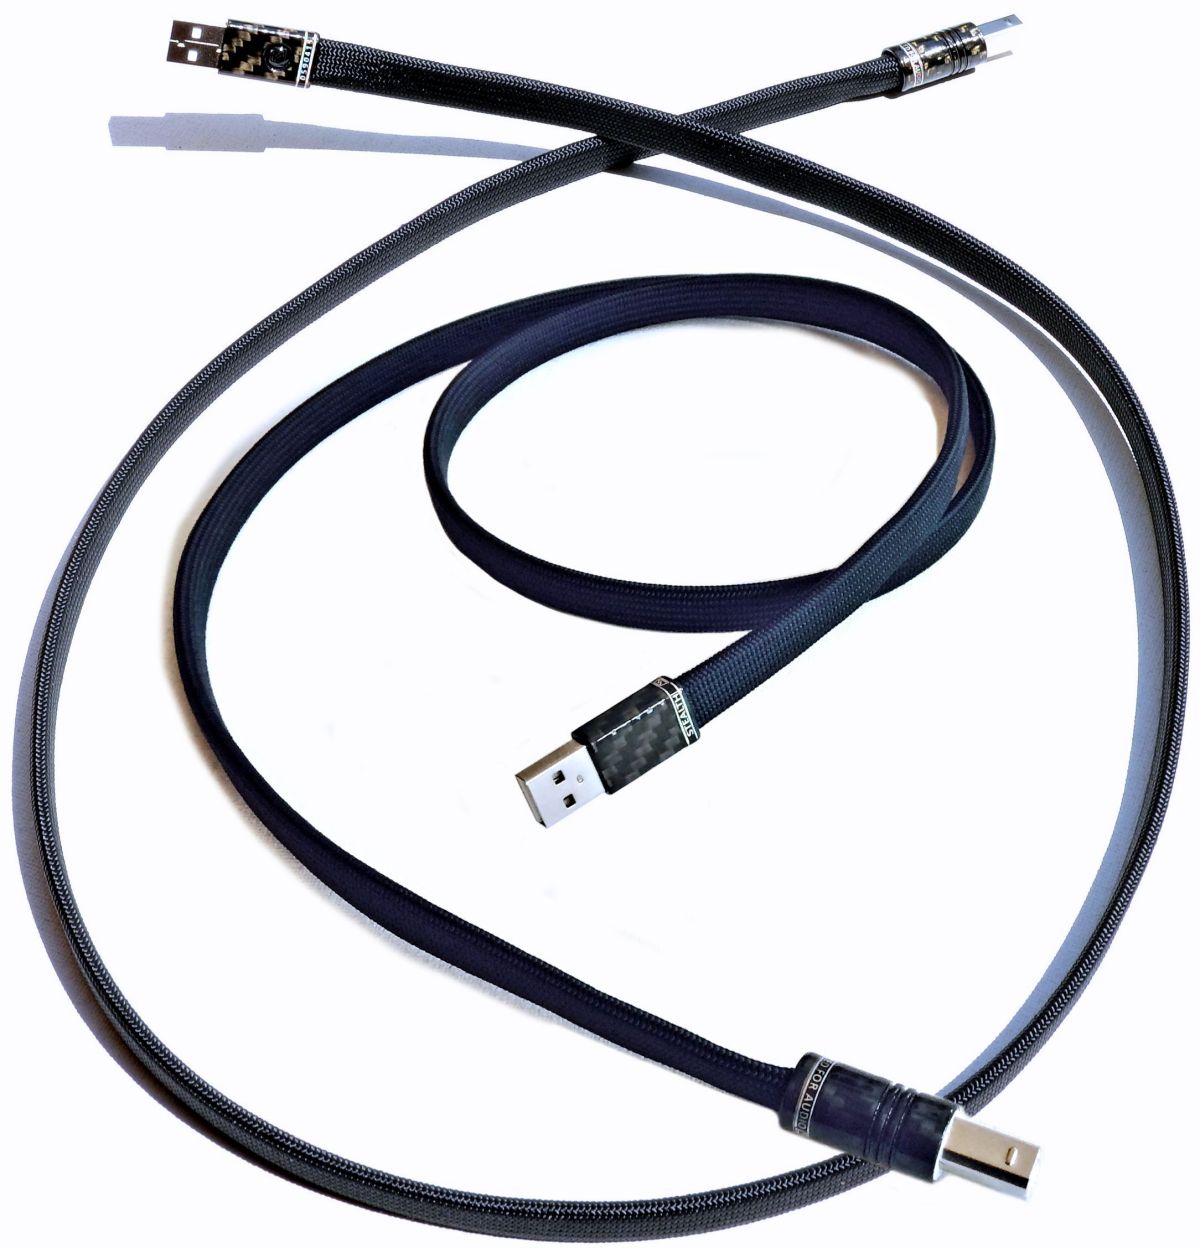 Stealth USB cable.jpg